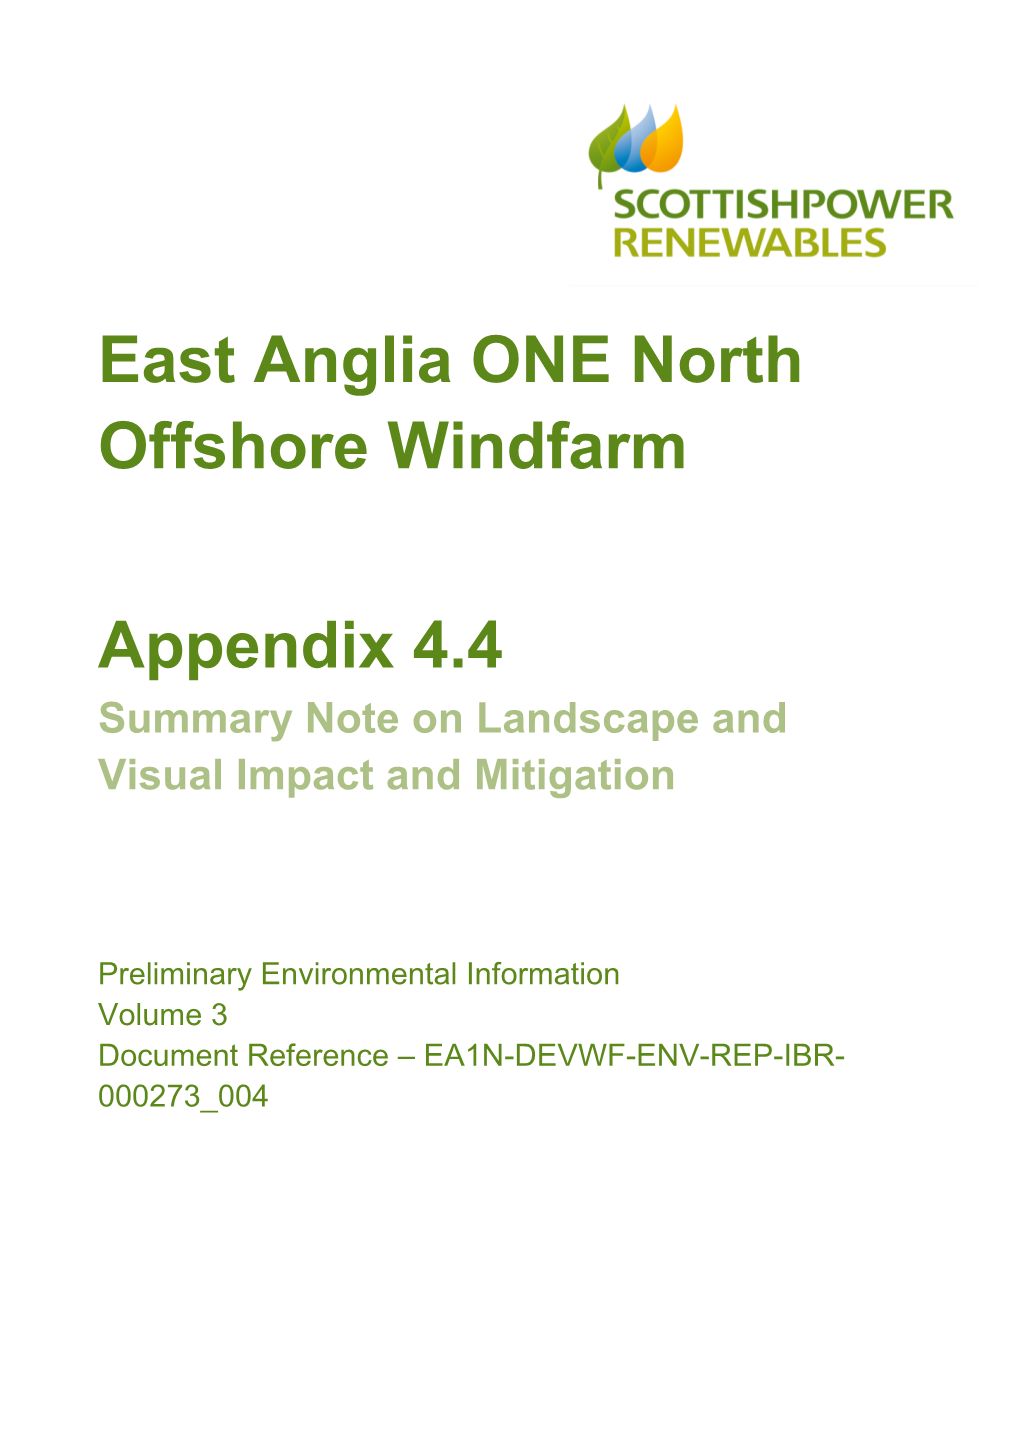 East Anglia ONE North Offshore Windfarm Appendix